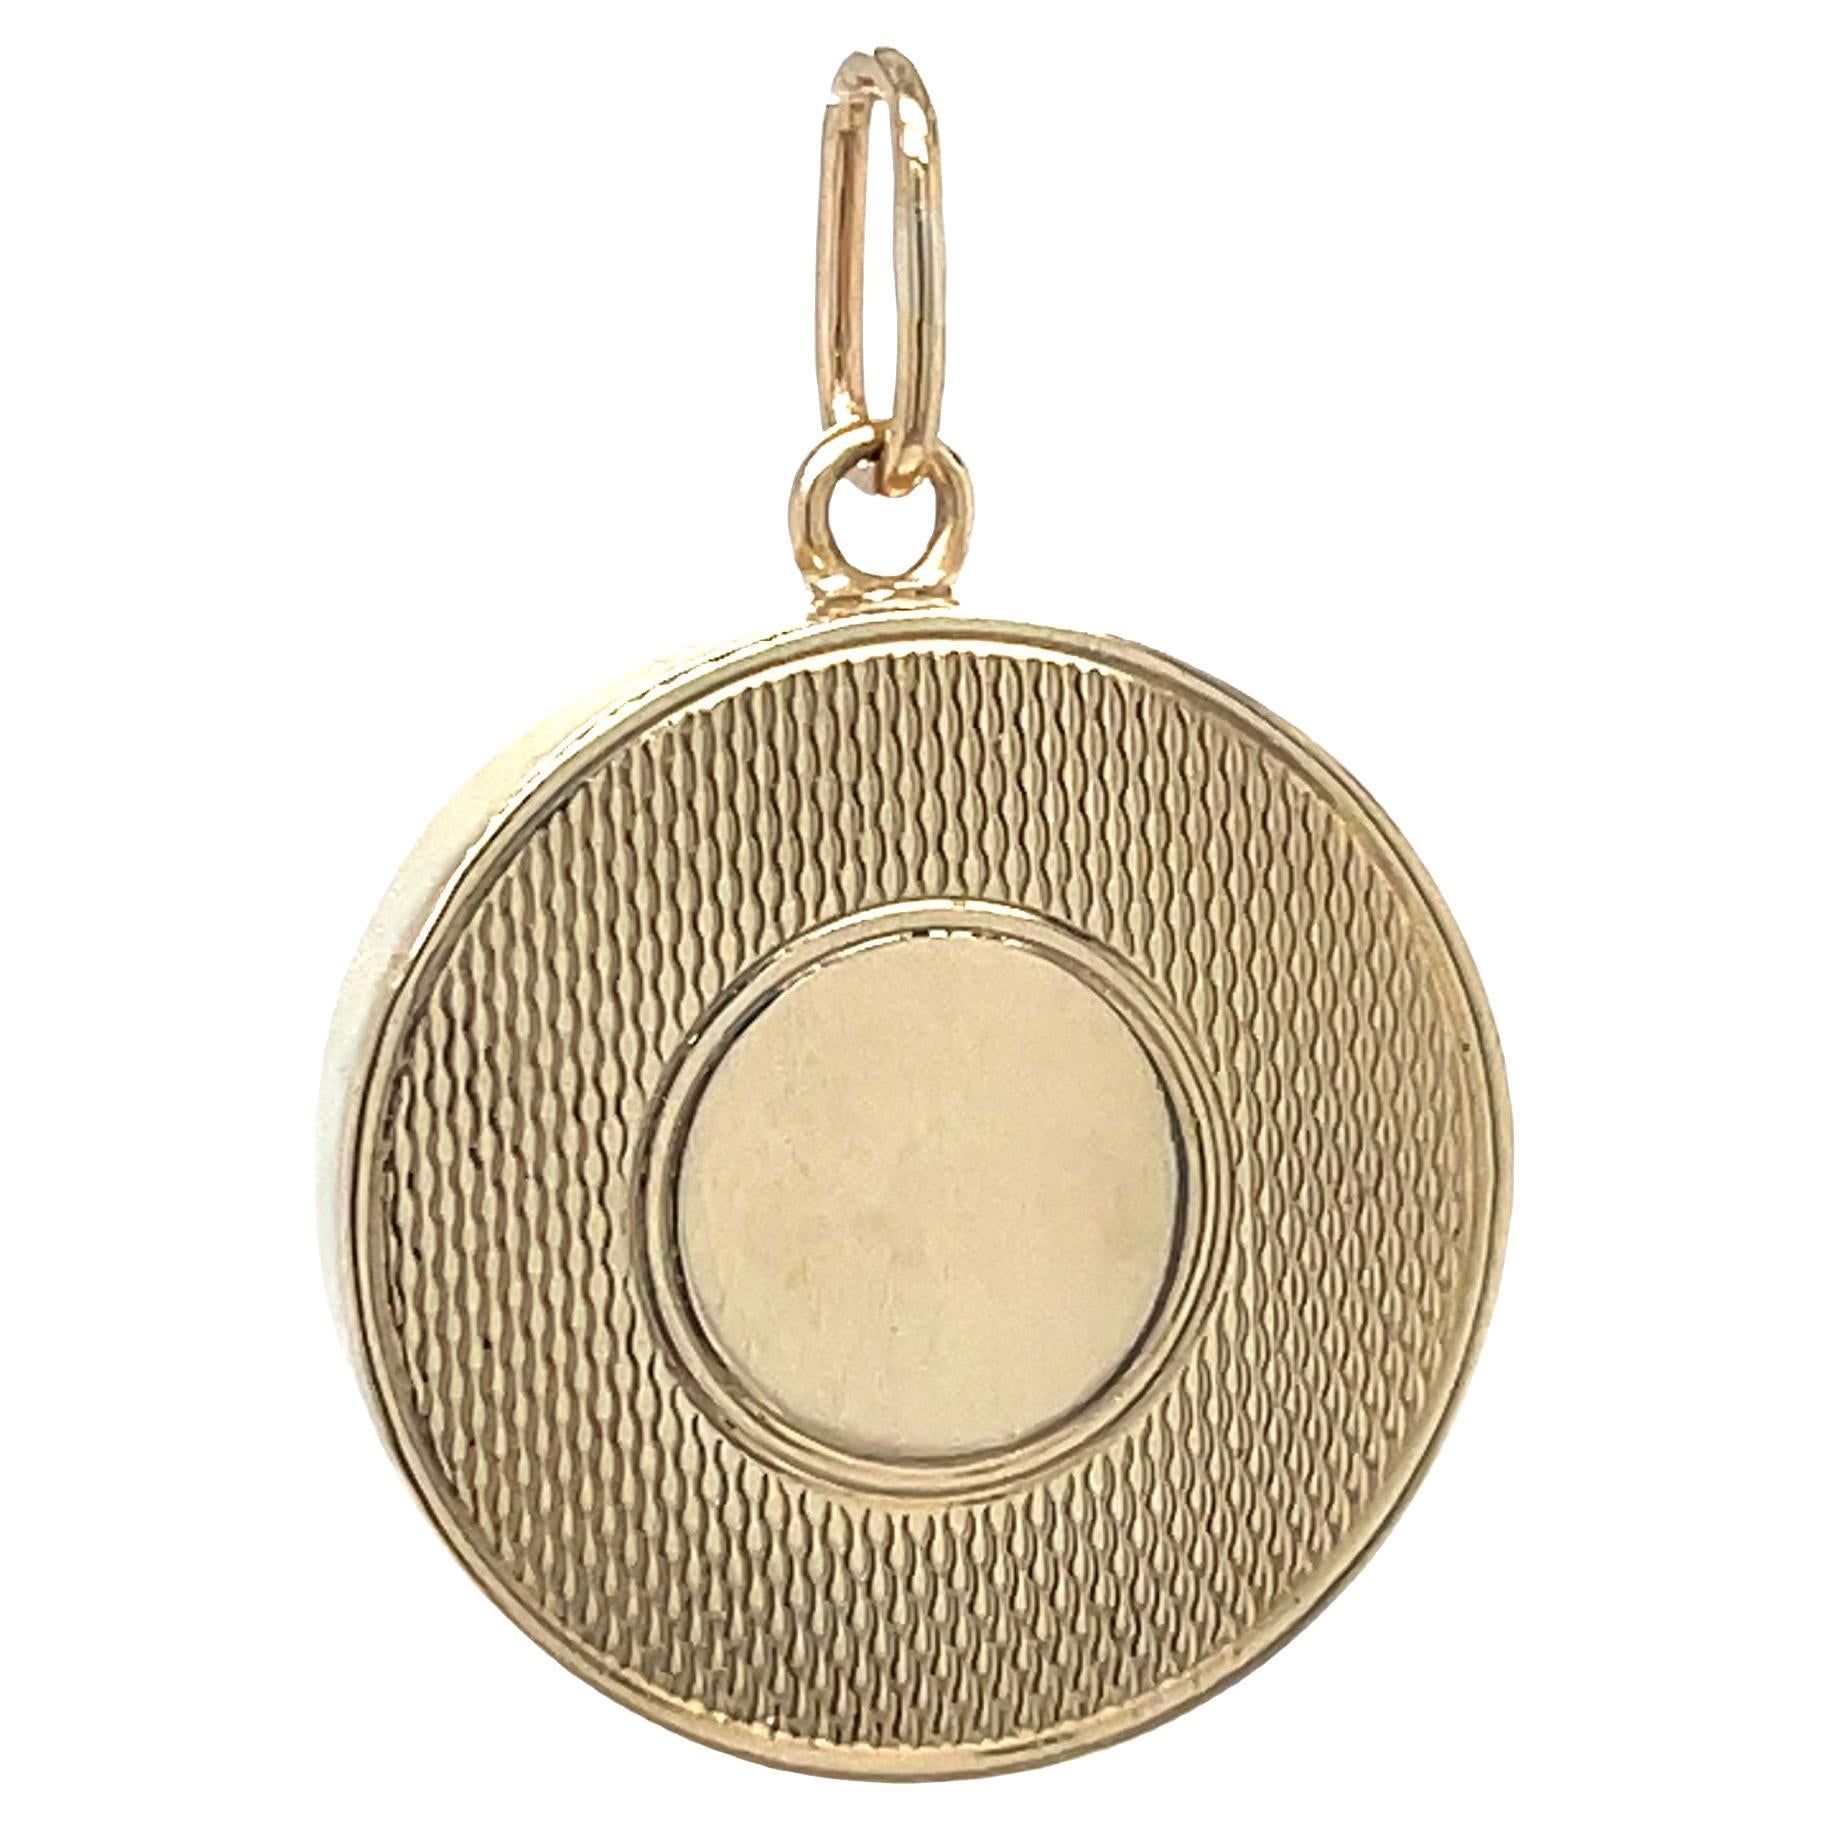 Tiffany & Co. 925 Sterling Silver Key Chain Key Ring Octagon Monogram  Keychain